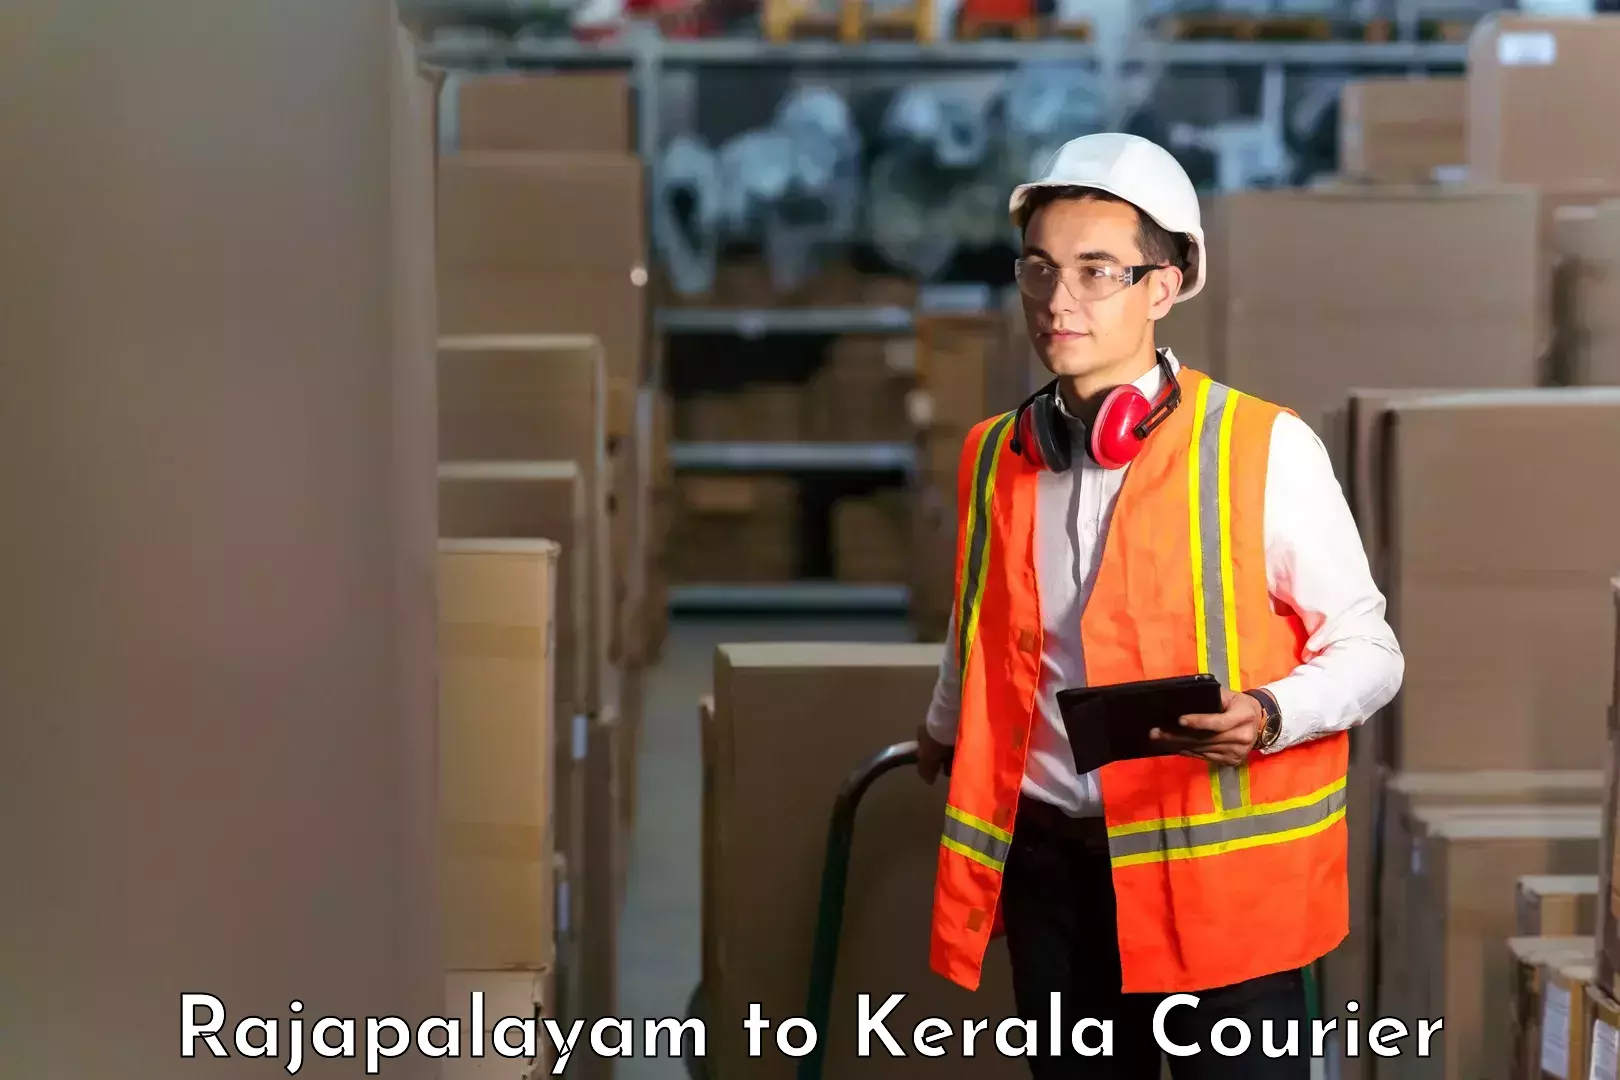 Courier service partnerships Rajapalayam to Kannur